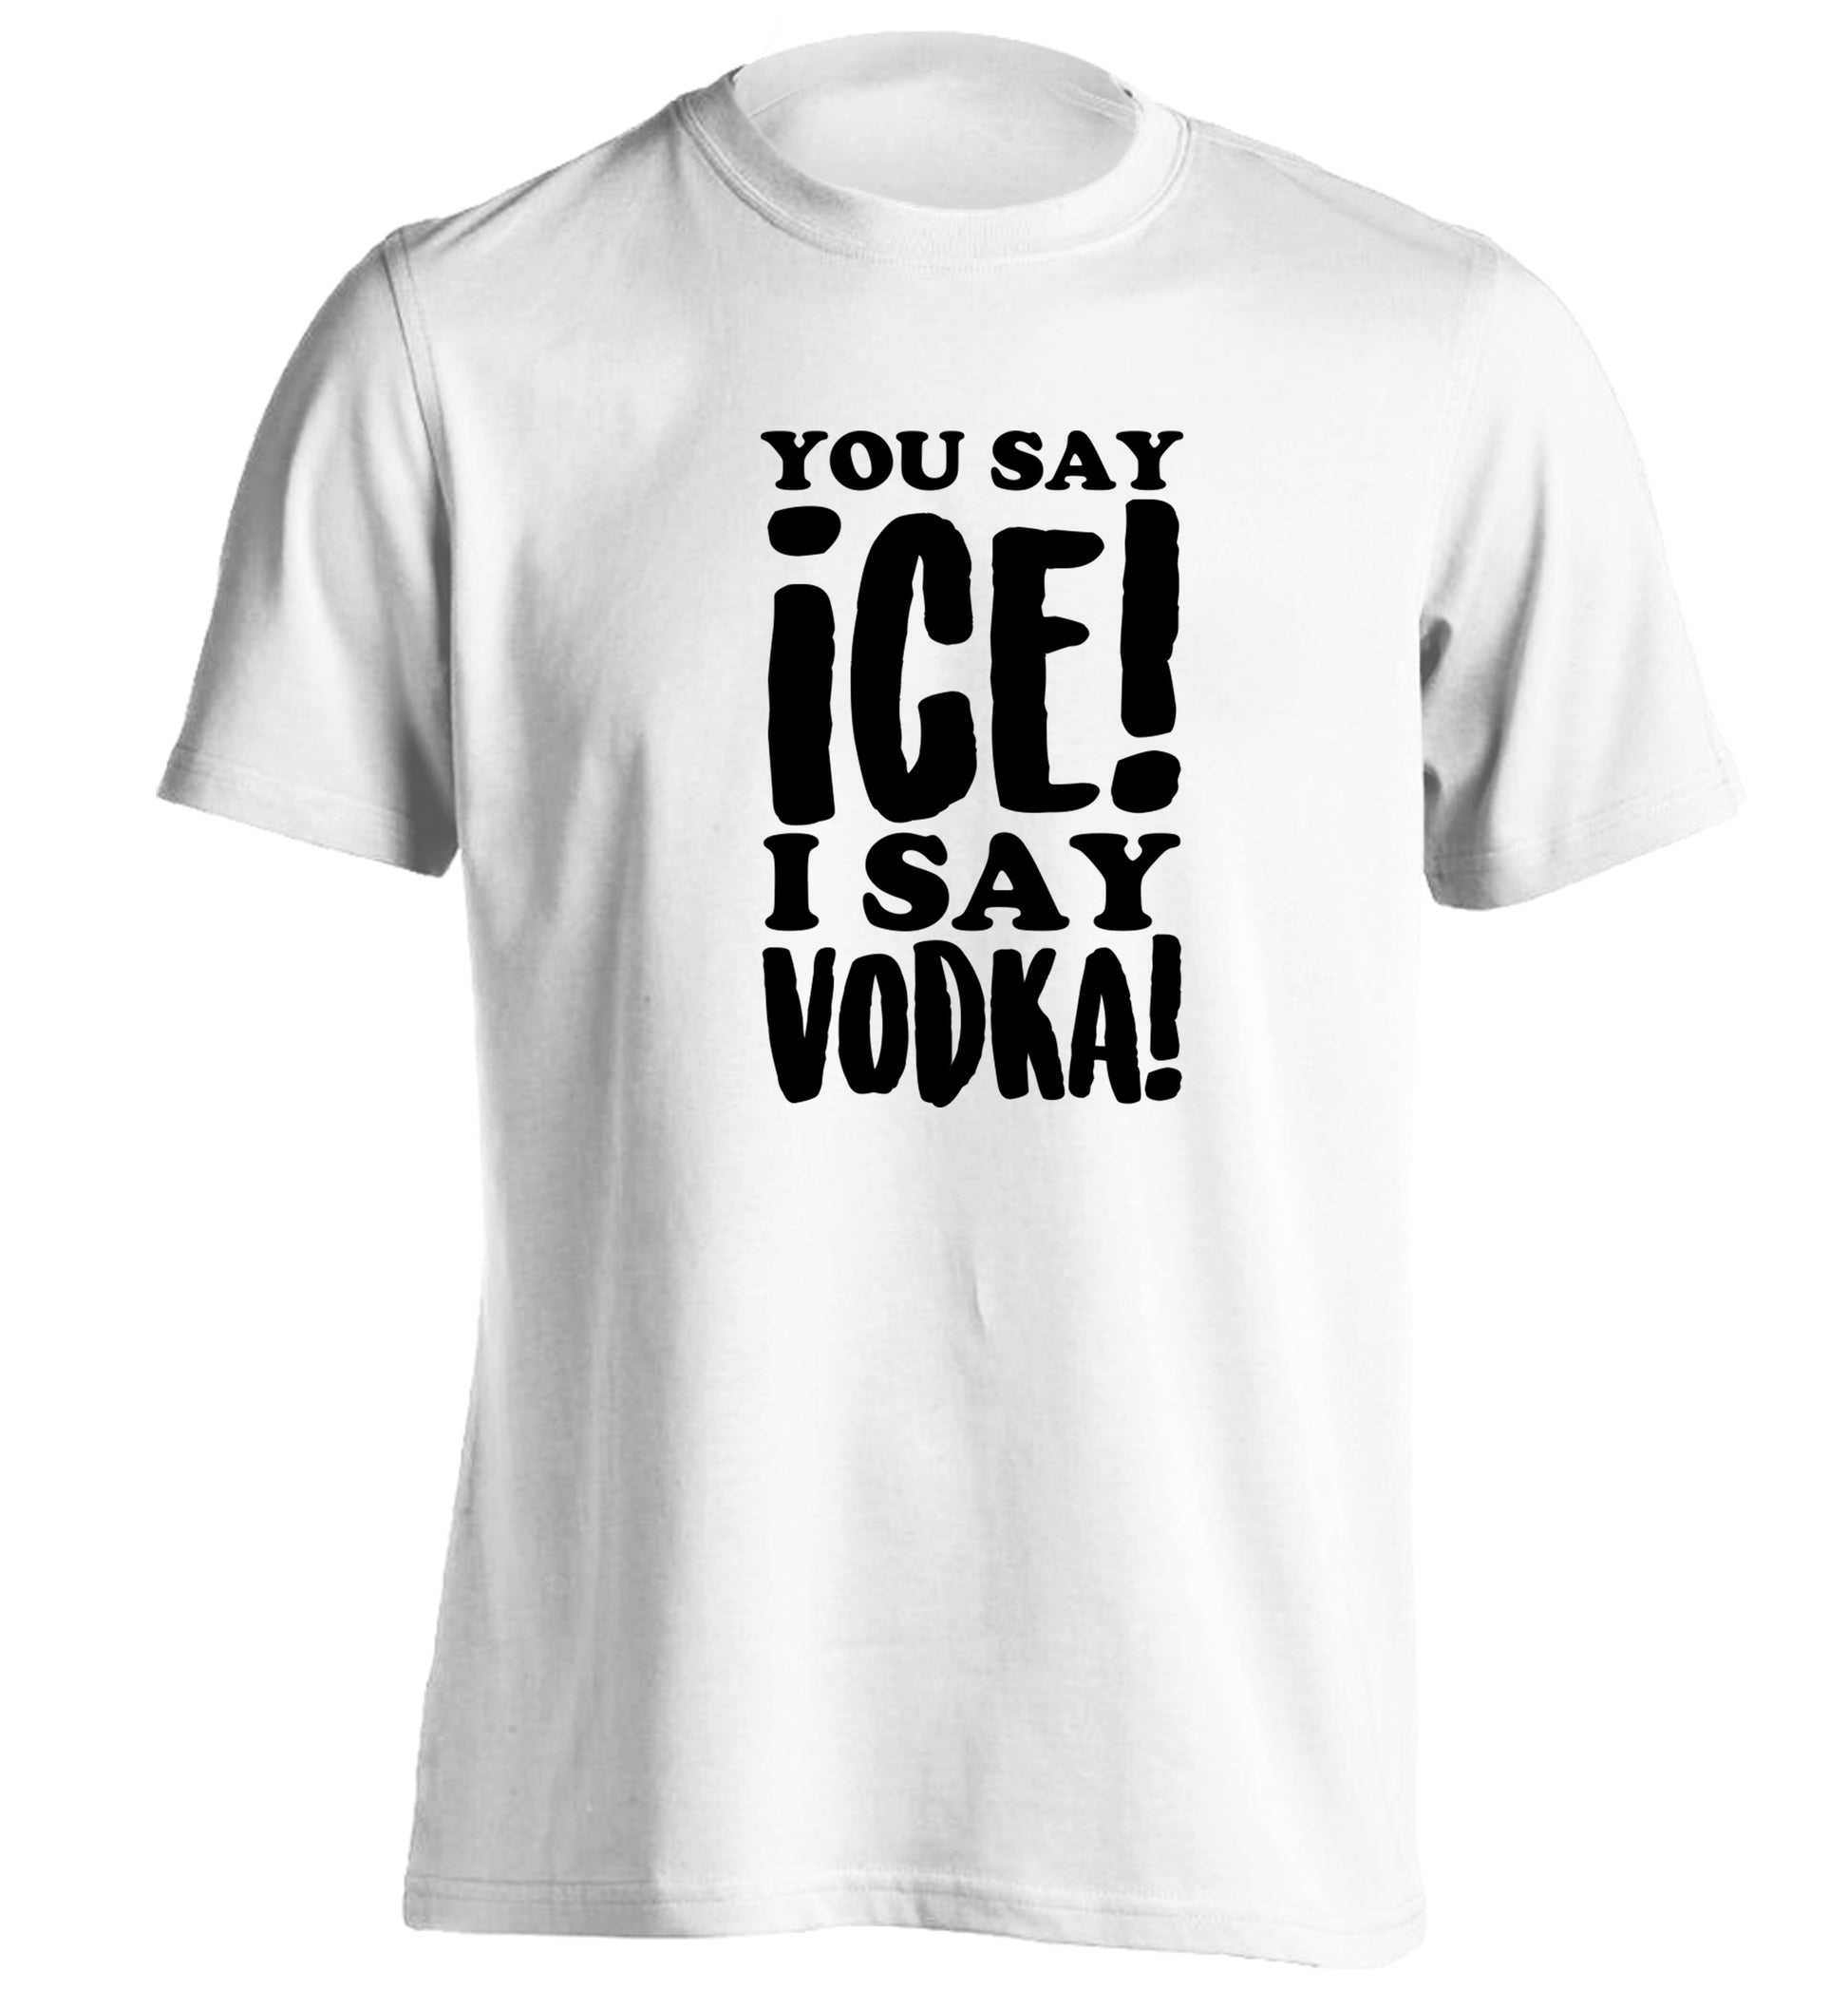 You say ice I say vodka! adults unisex white Tshirt 2XL